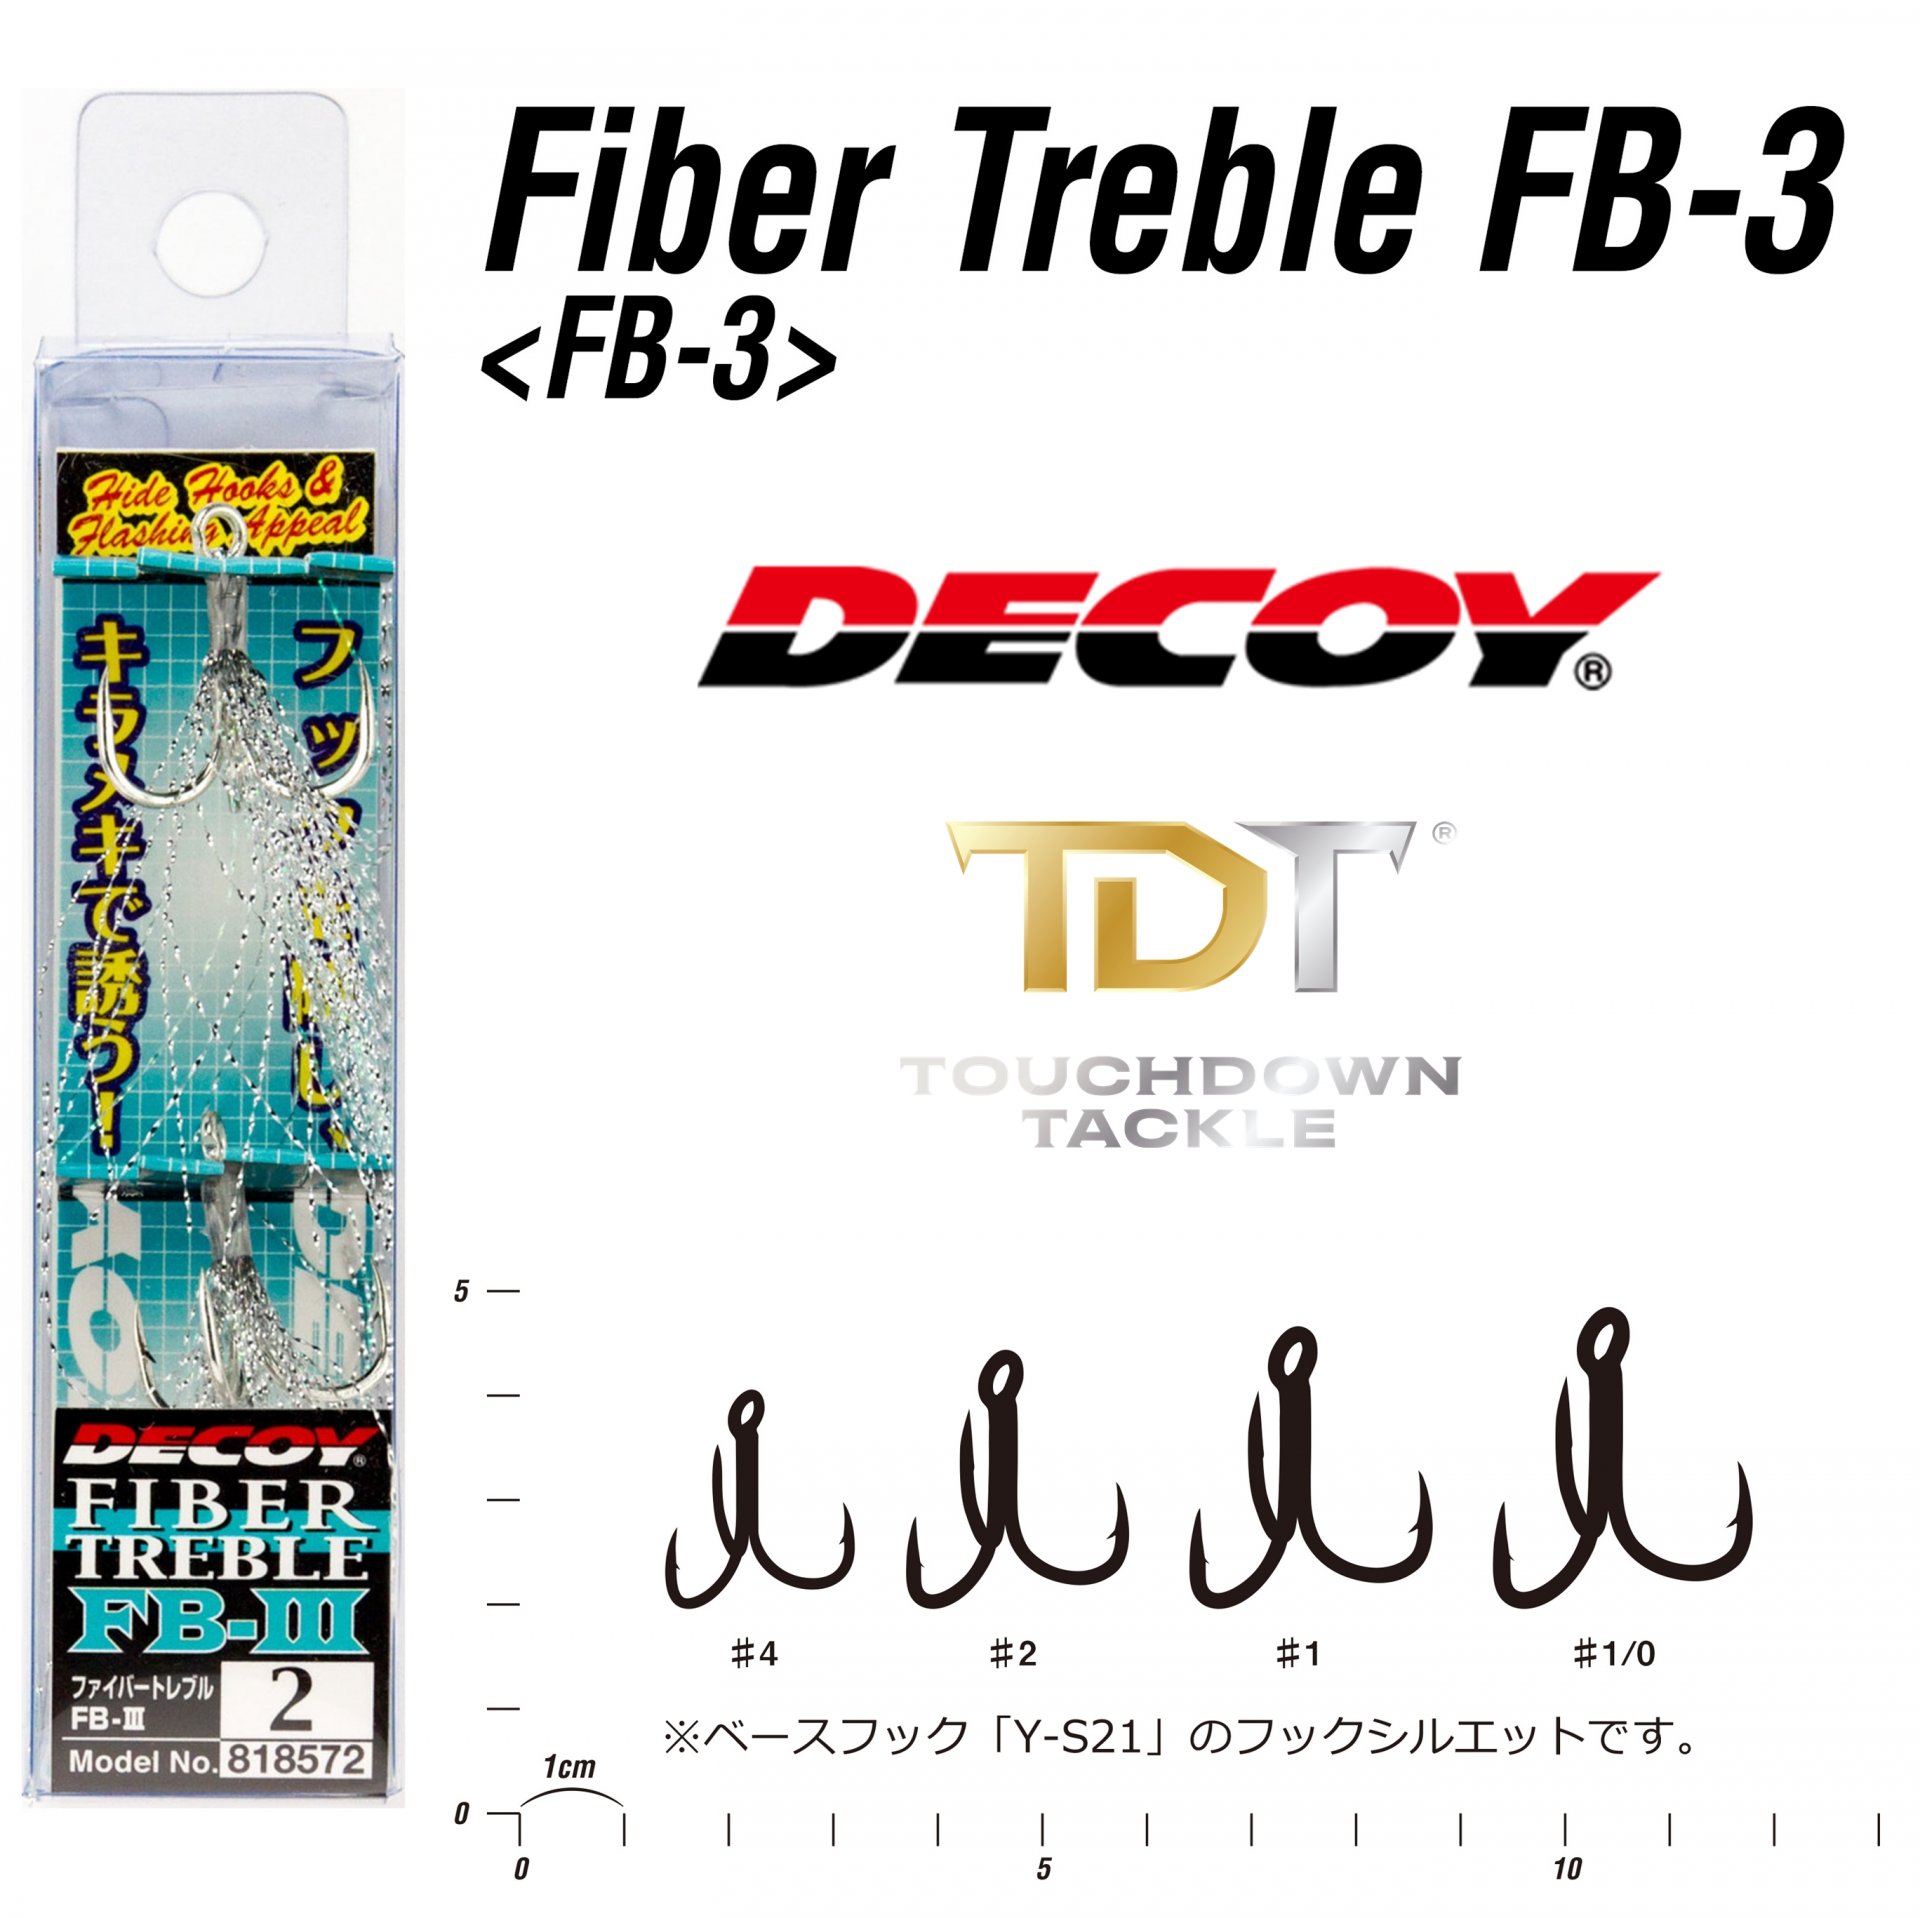 DECOY FB-3 FIBER TREBLE ตัวเบ็ดสามทางแฟลช เหยื่อผิวน้ำแจ่มจรัส